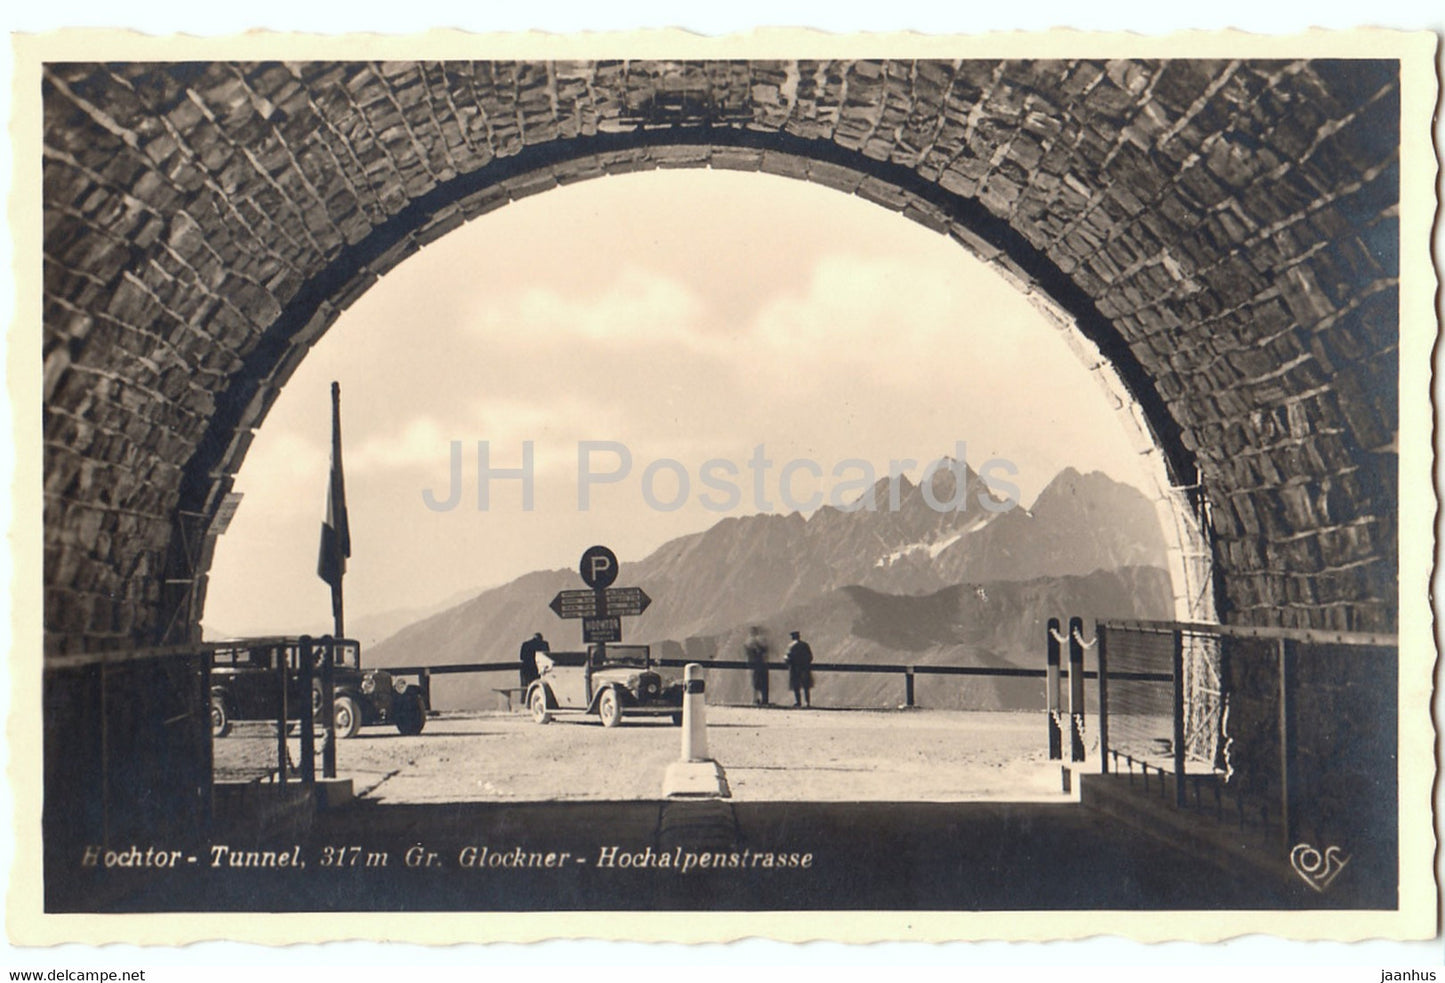 Hochtor Tunnel 317 m - Gr Glockner - Hochalpenstrasse - old car - old postcard - 1938 - Austria - unused - JH Postcards